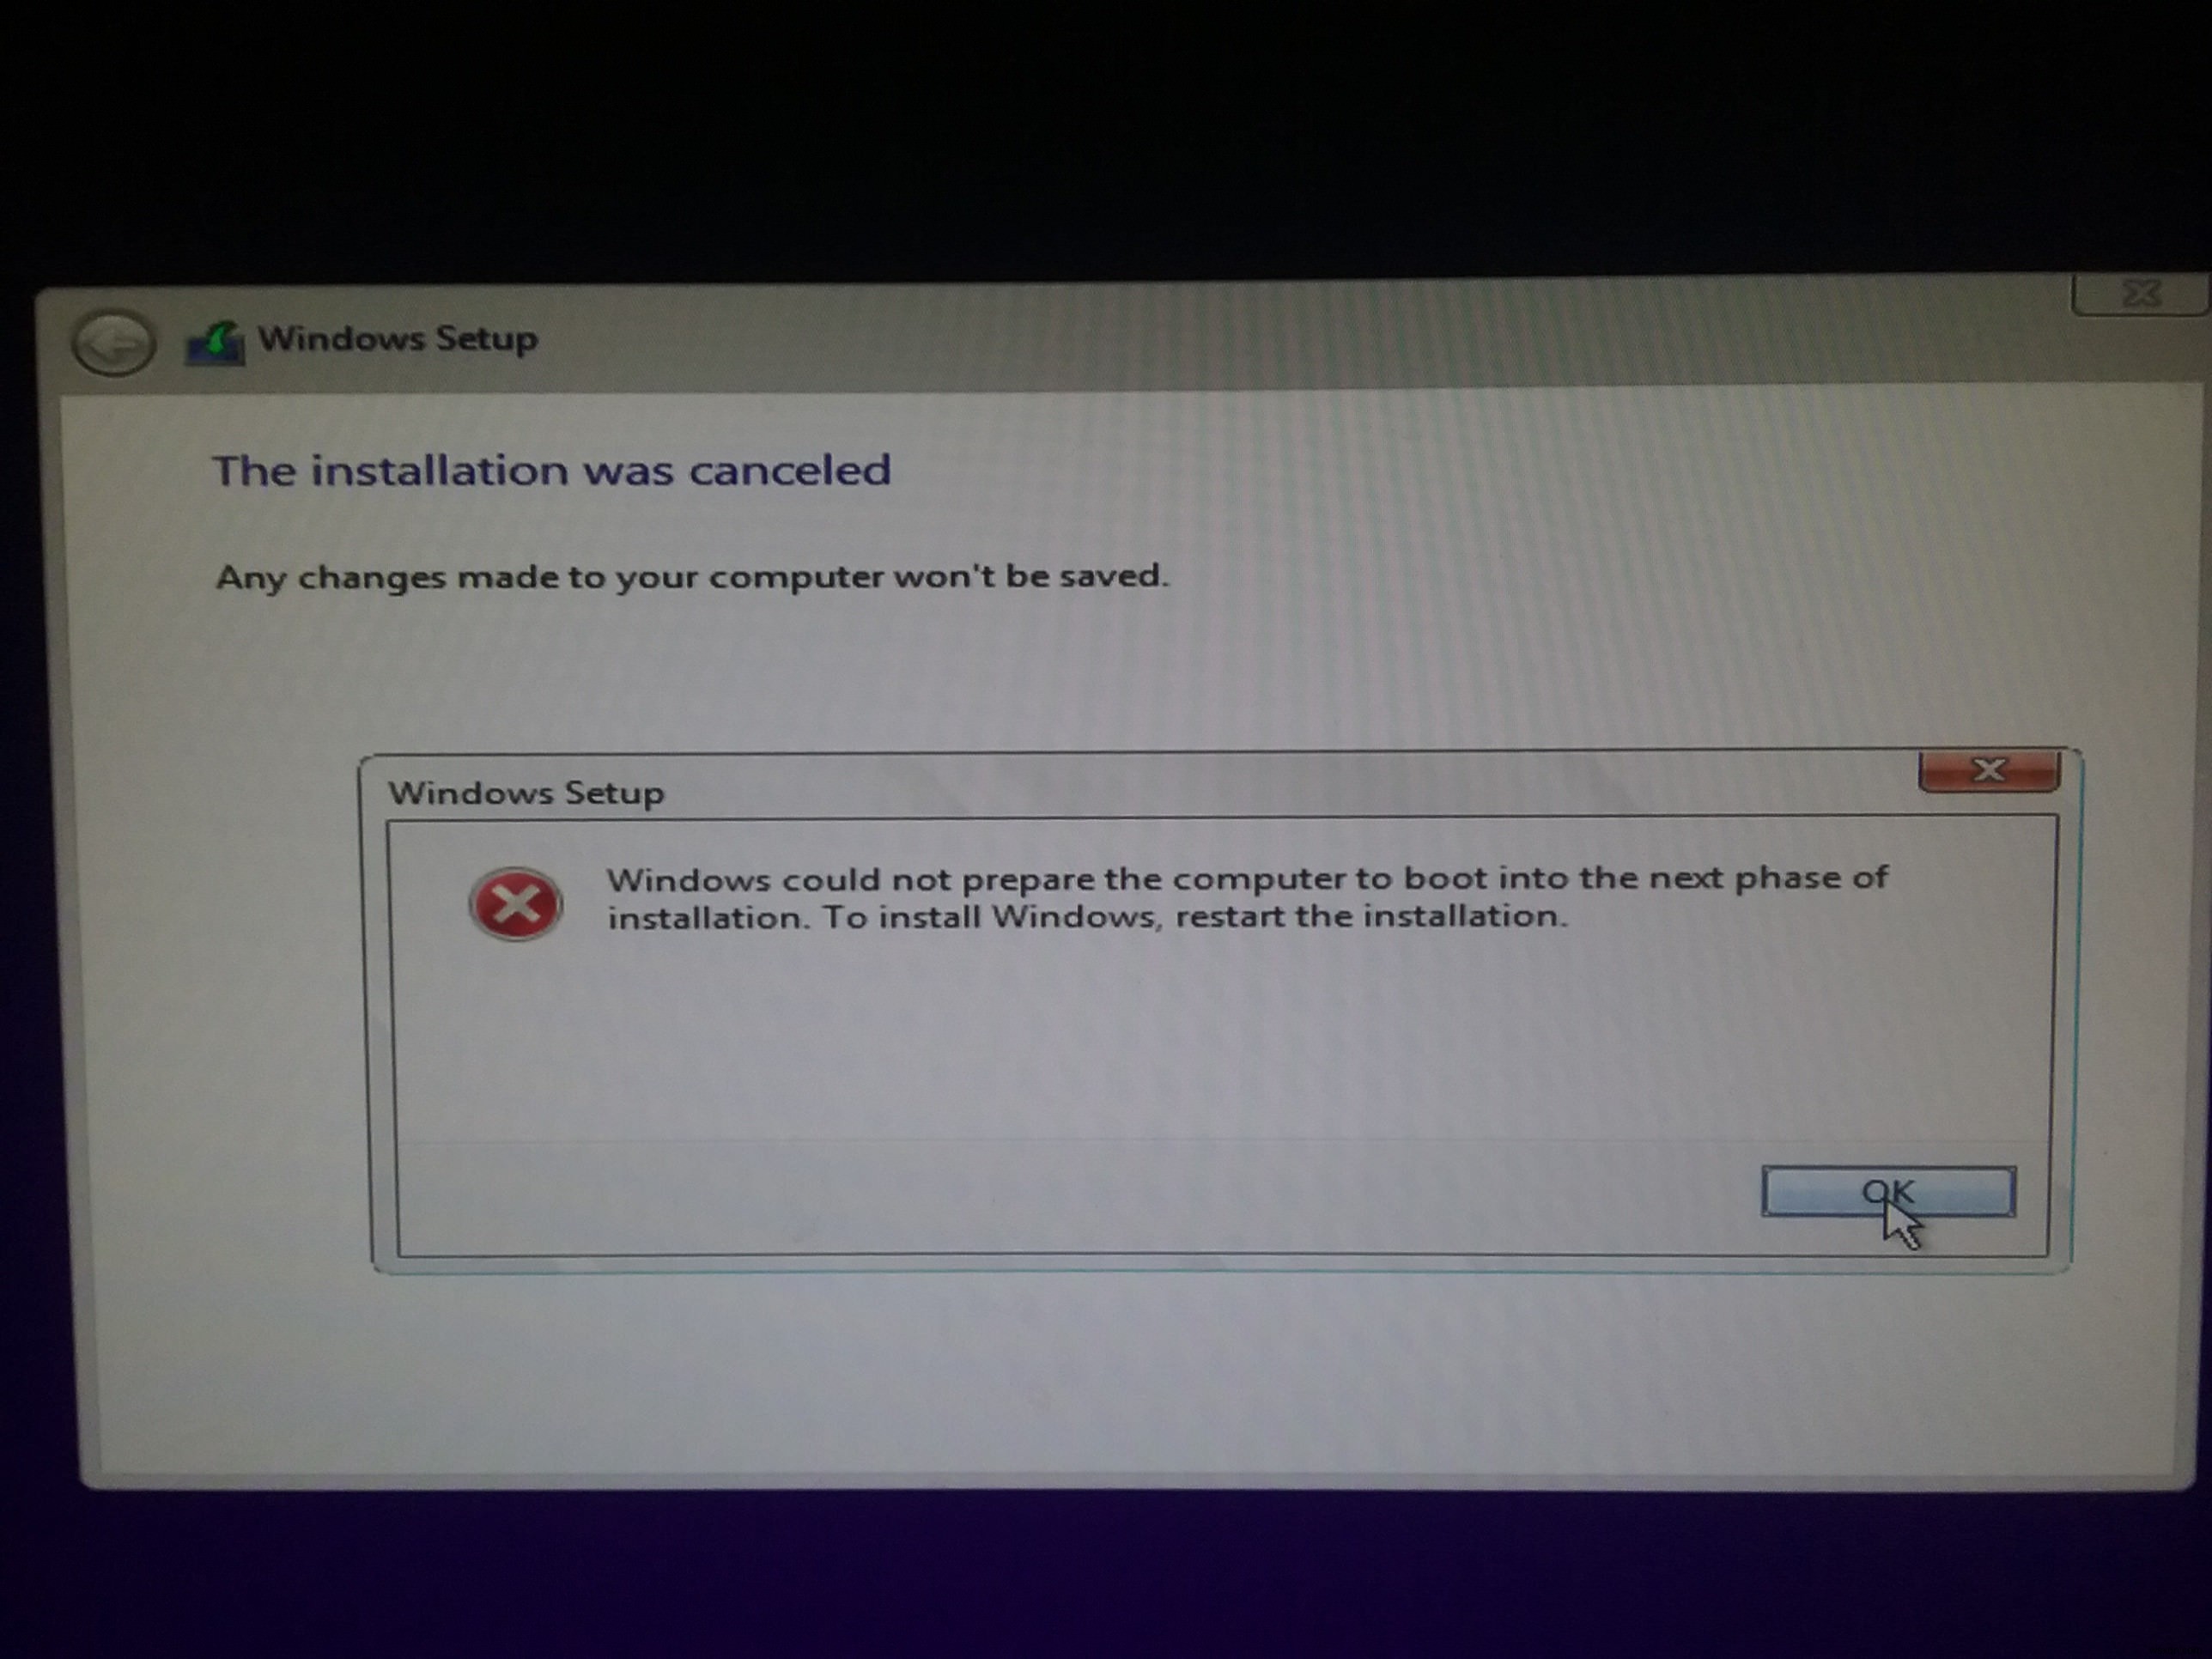 Windows ไม่สามารถเตรียมคอมพิวเตอร์ให้บูตเข้าสู่ขั้นตอนการติดตั้งถัดไปได้ 